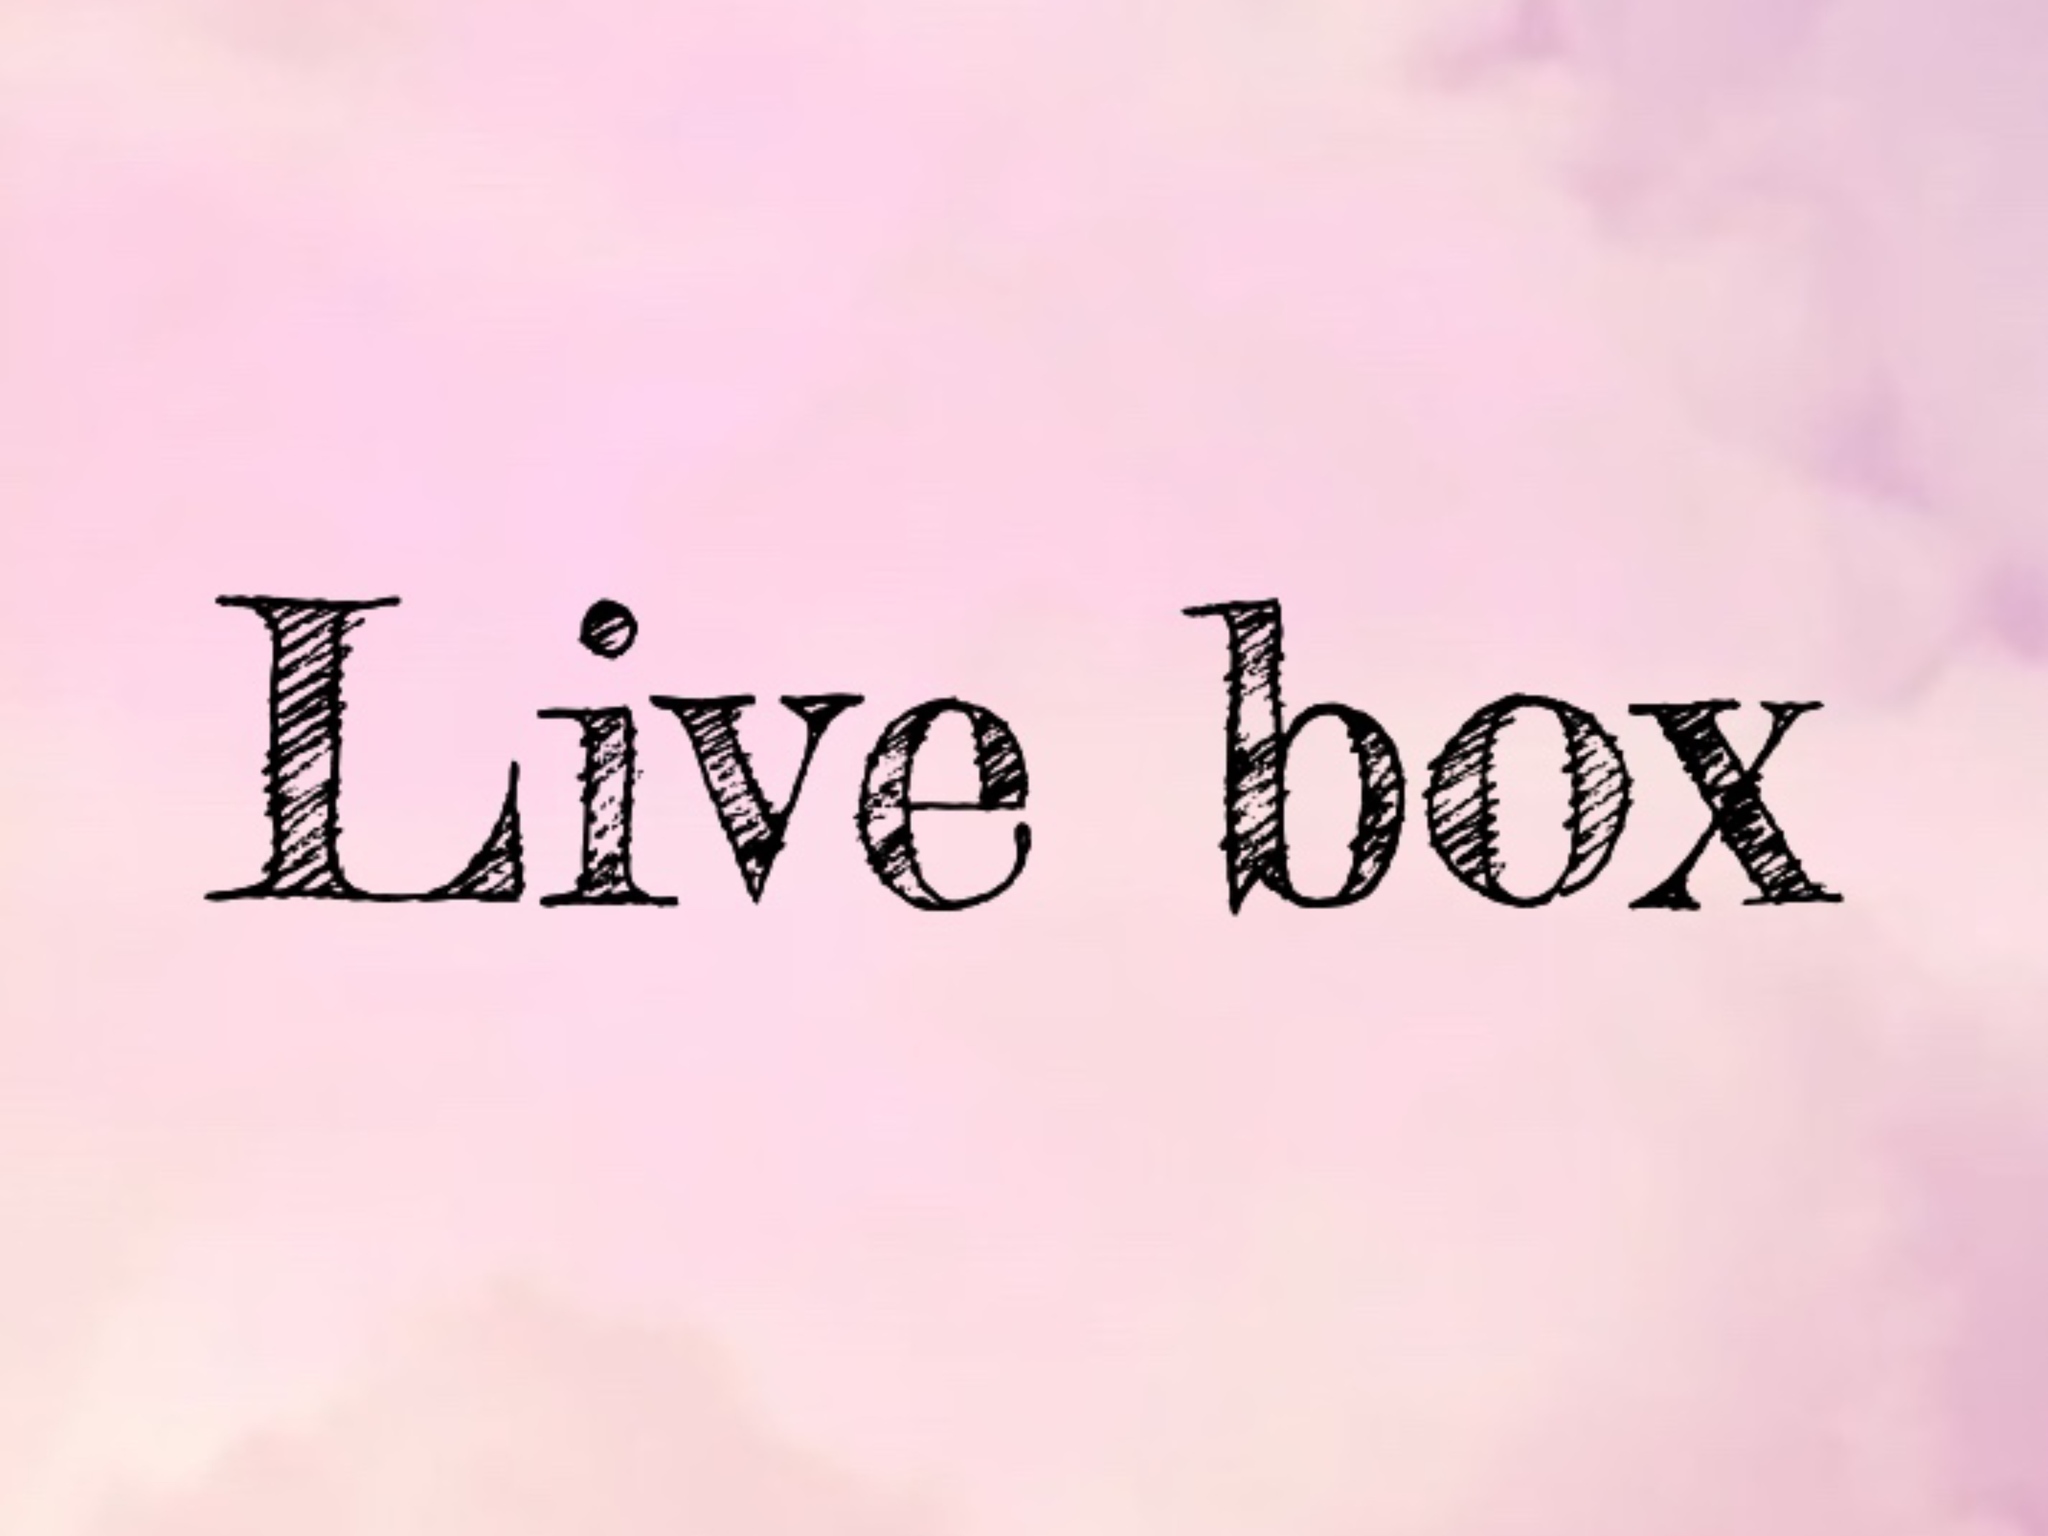 Live box #3